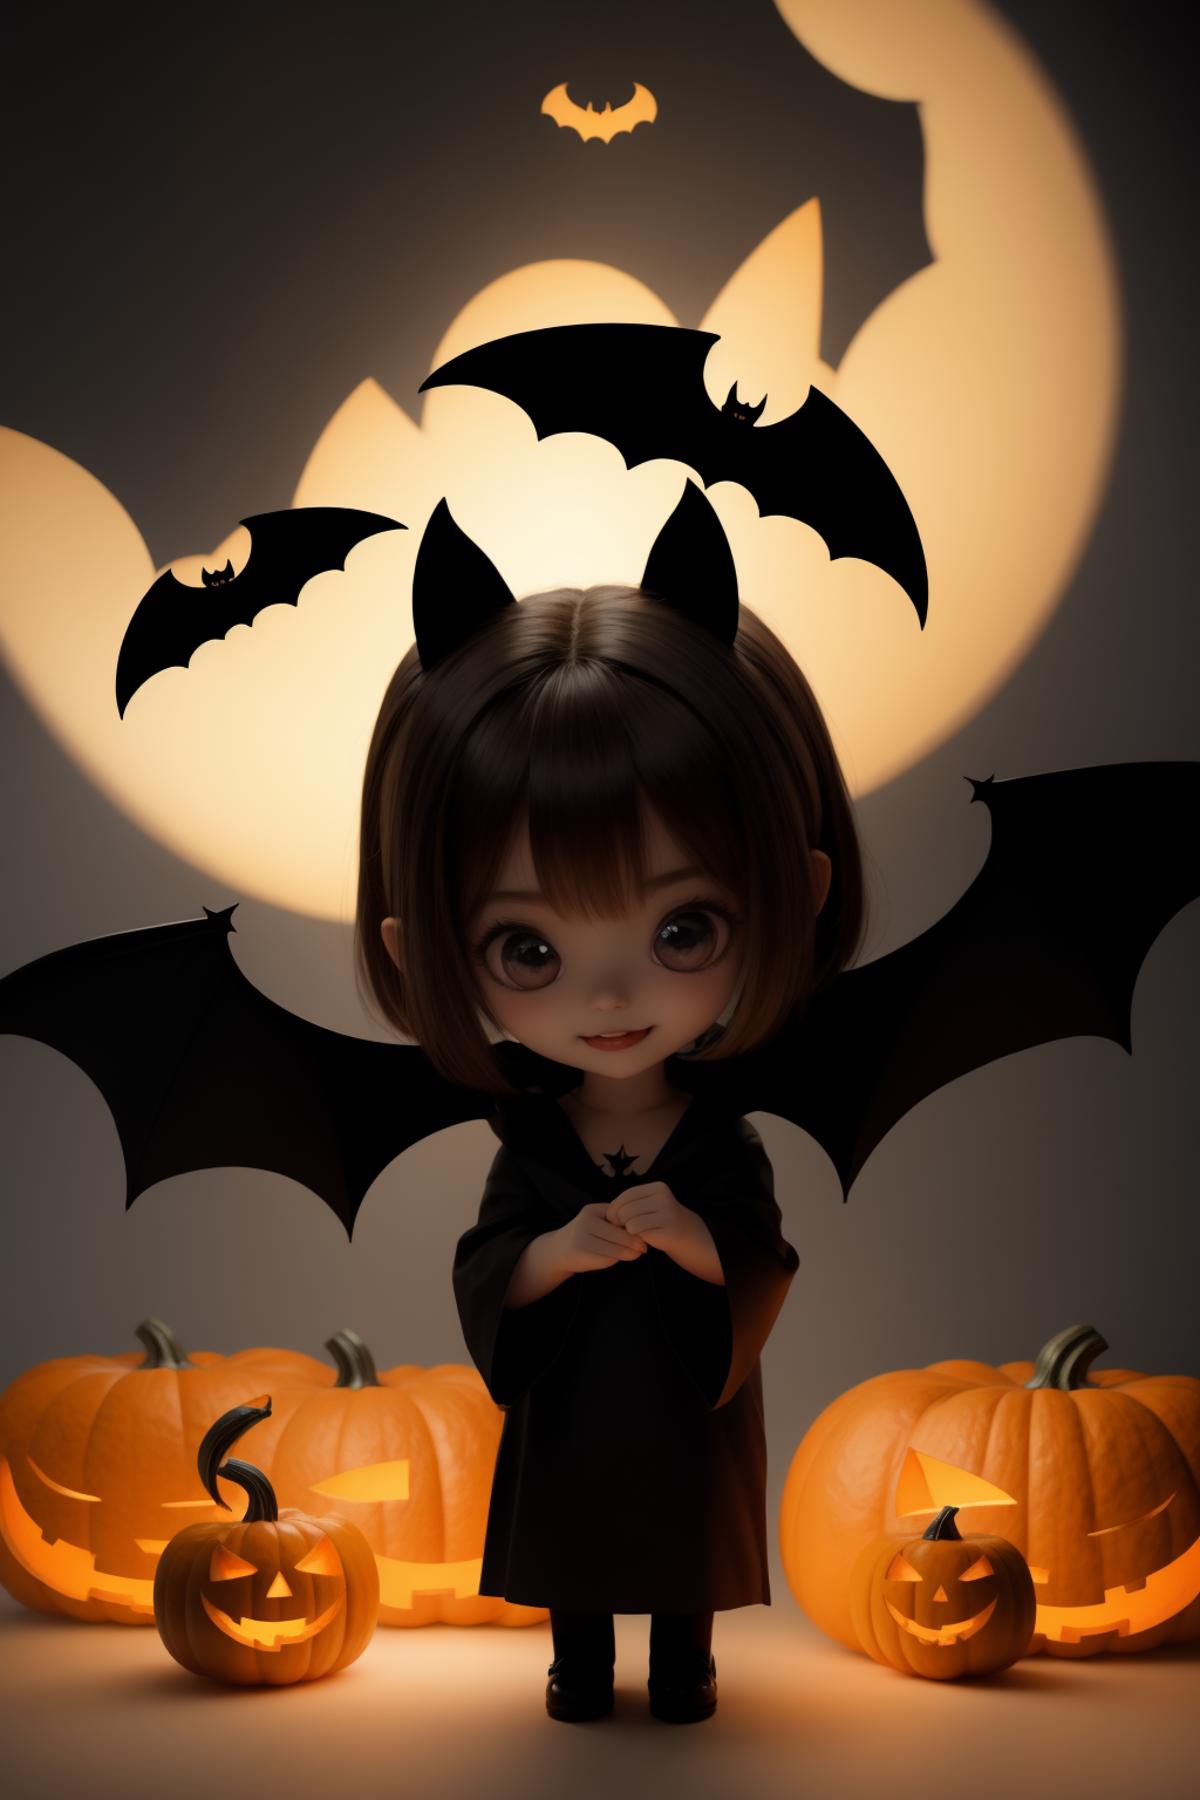 Pumpkin Bat & Bat Girl image by MIAOKA